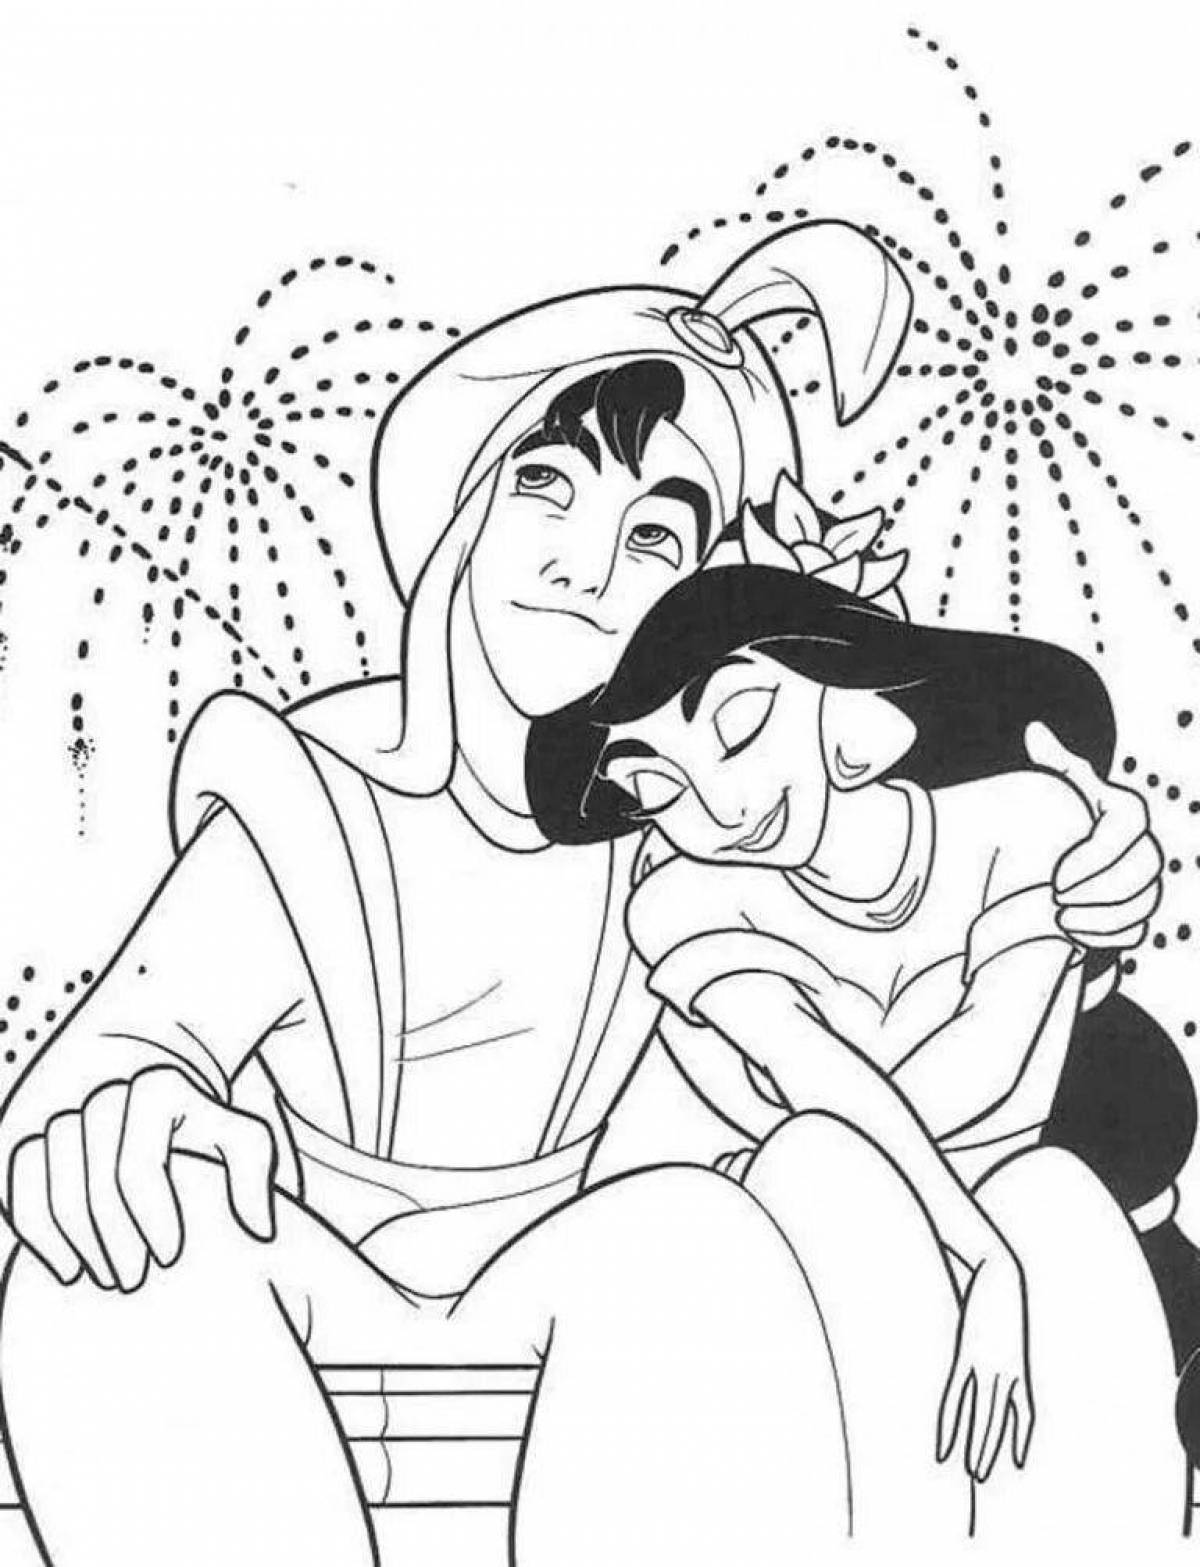 Joyful Aladdin coloring book